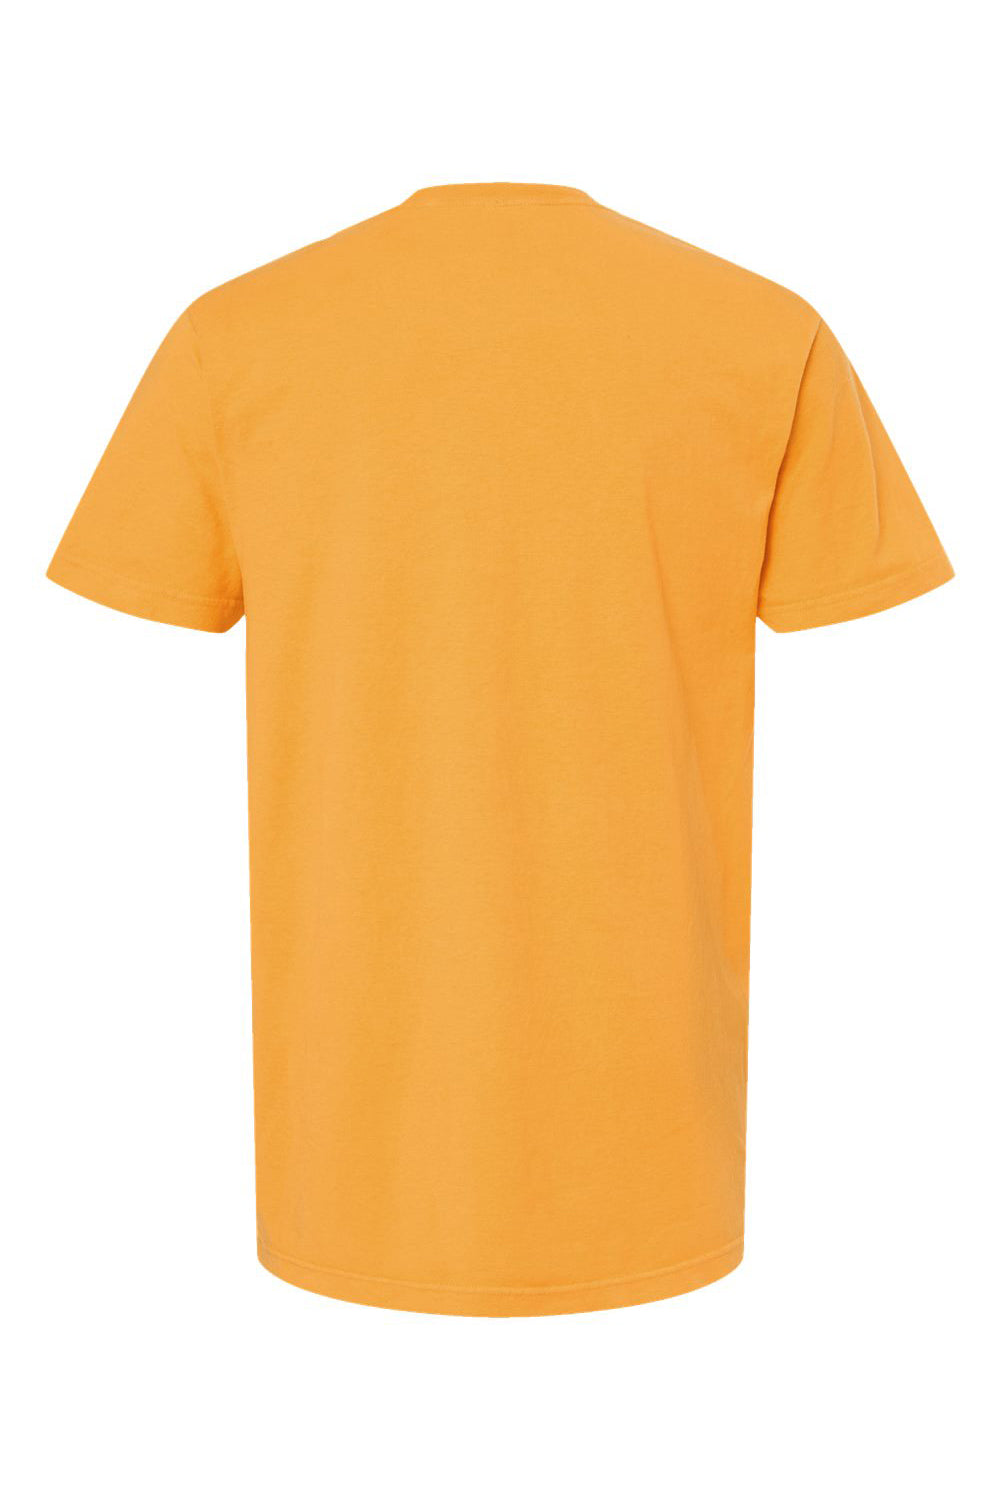 M&O 6500M Mens Vintage Garment Dyed Short Sleeve Crewneck T-Shirt Citrus Yellow Flat Back